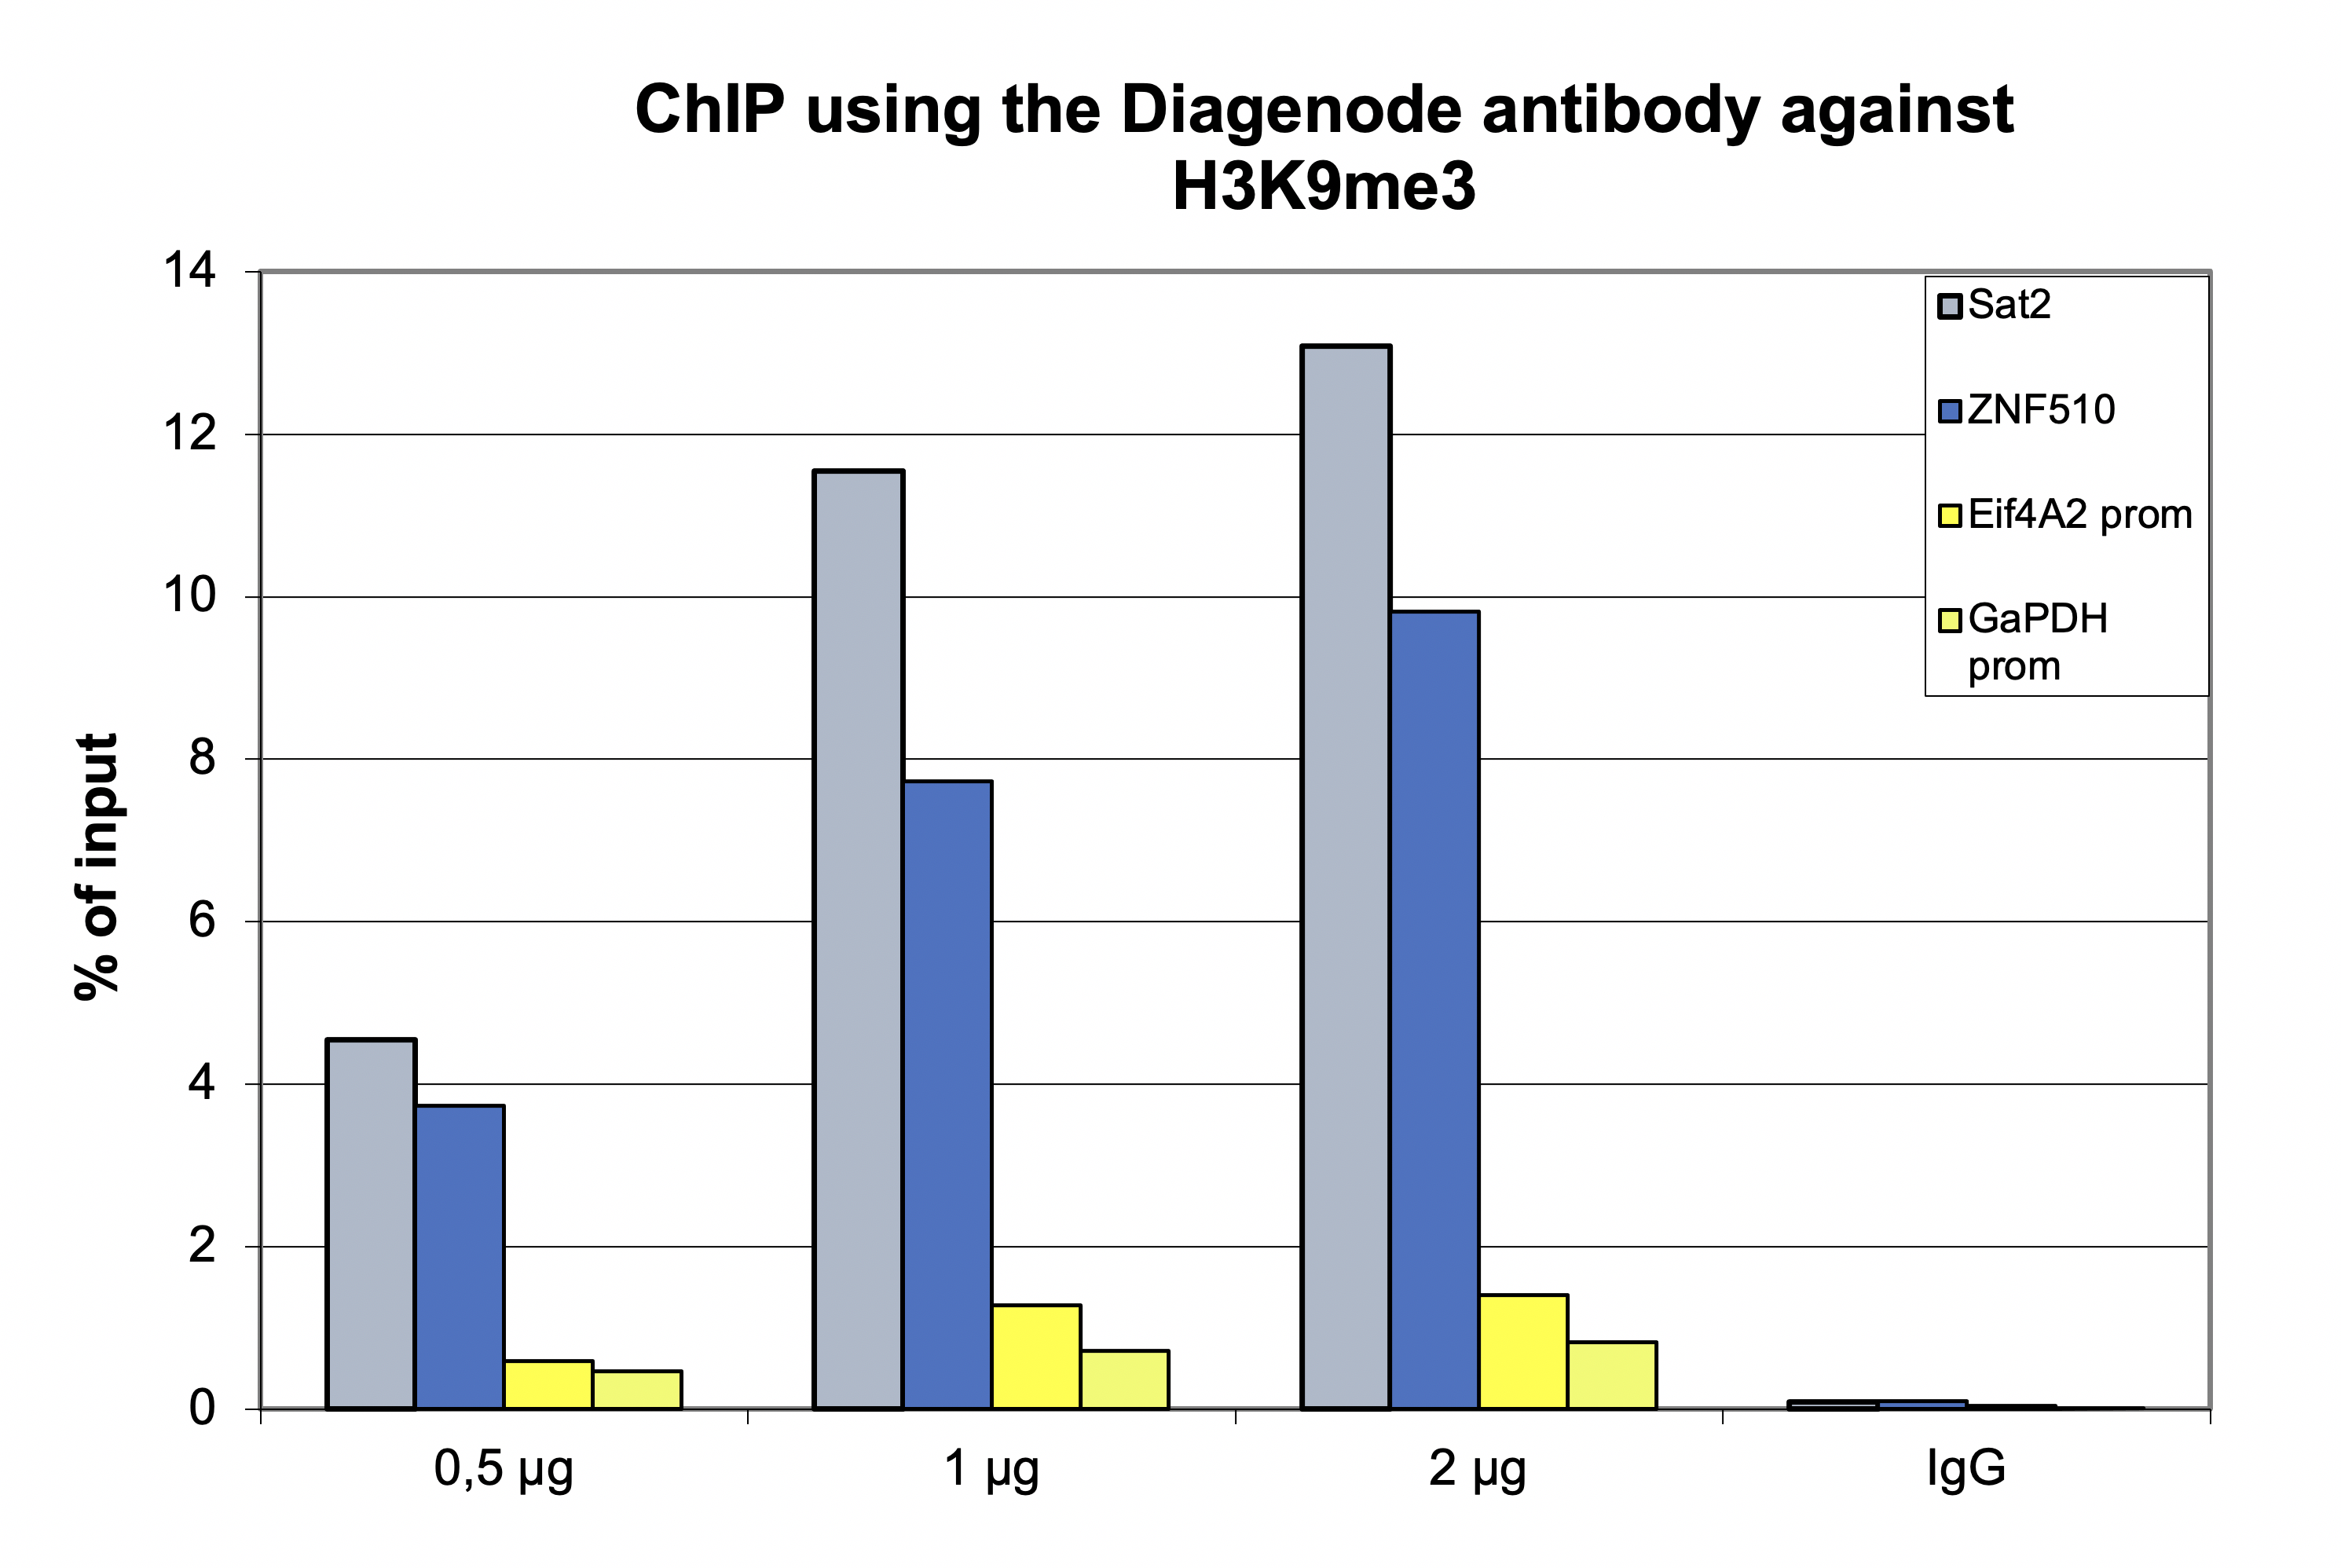 H3K9me3 Antibody ChIP Grade